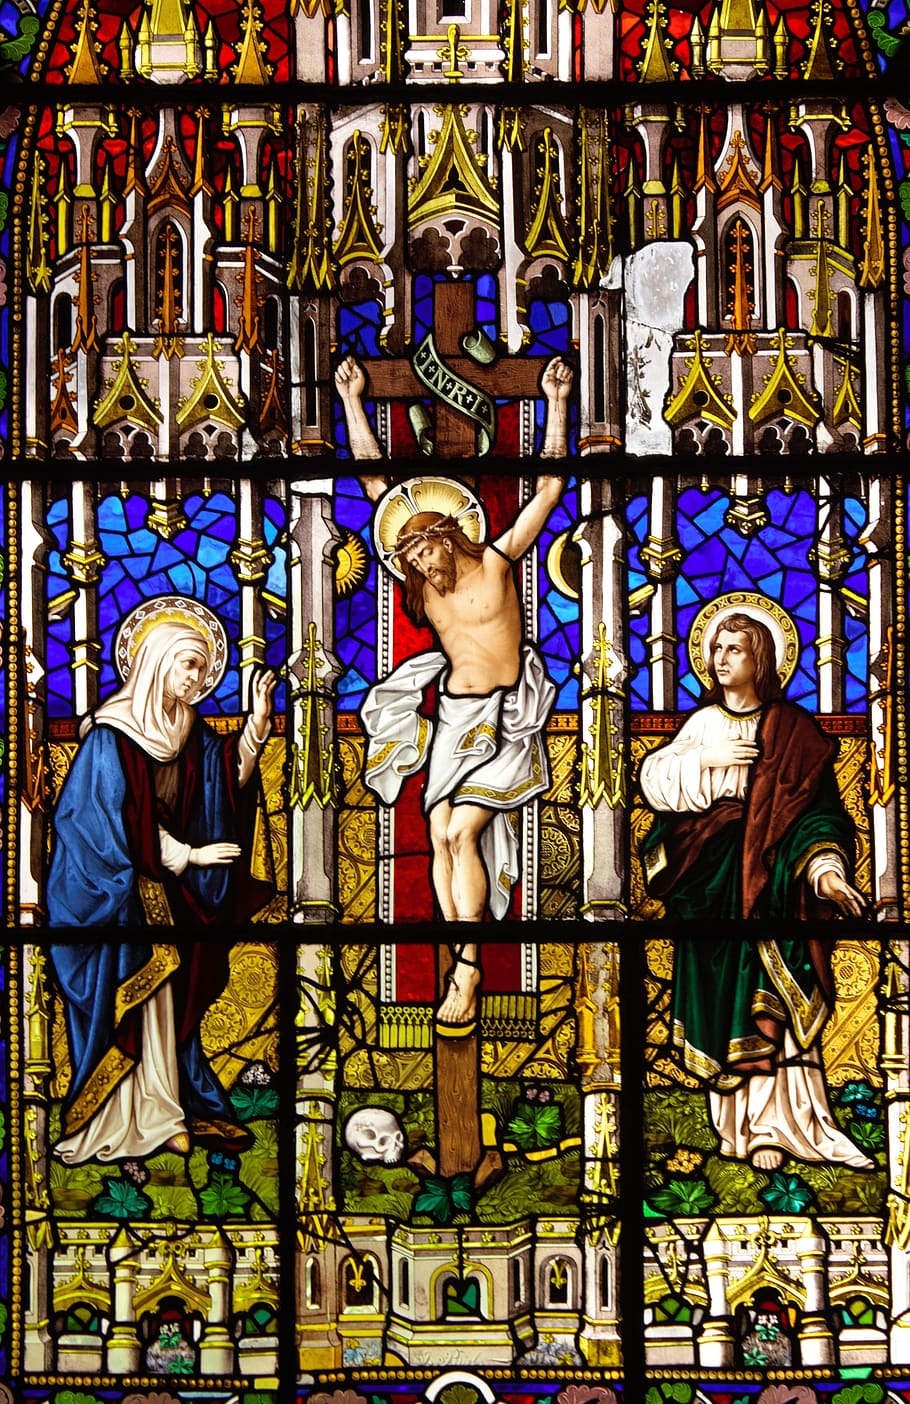 jesús, cruz, ventana de la iglesia, castell de santa florentina, cataluña, crucifixión, cristianismo, representación, representación humana, arte y artesanía